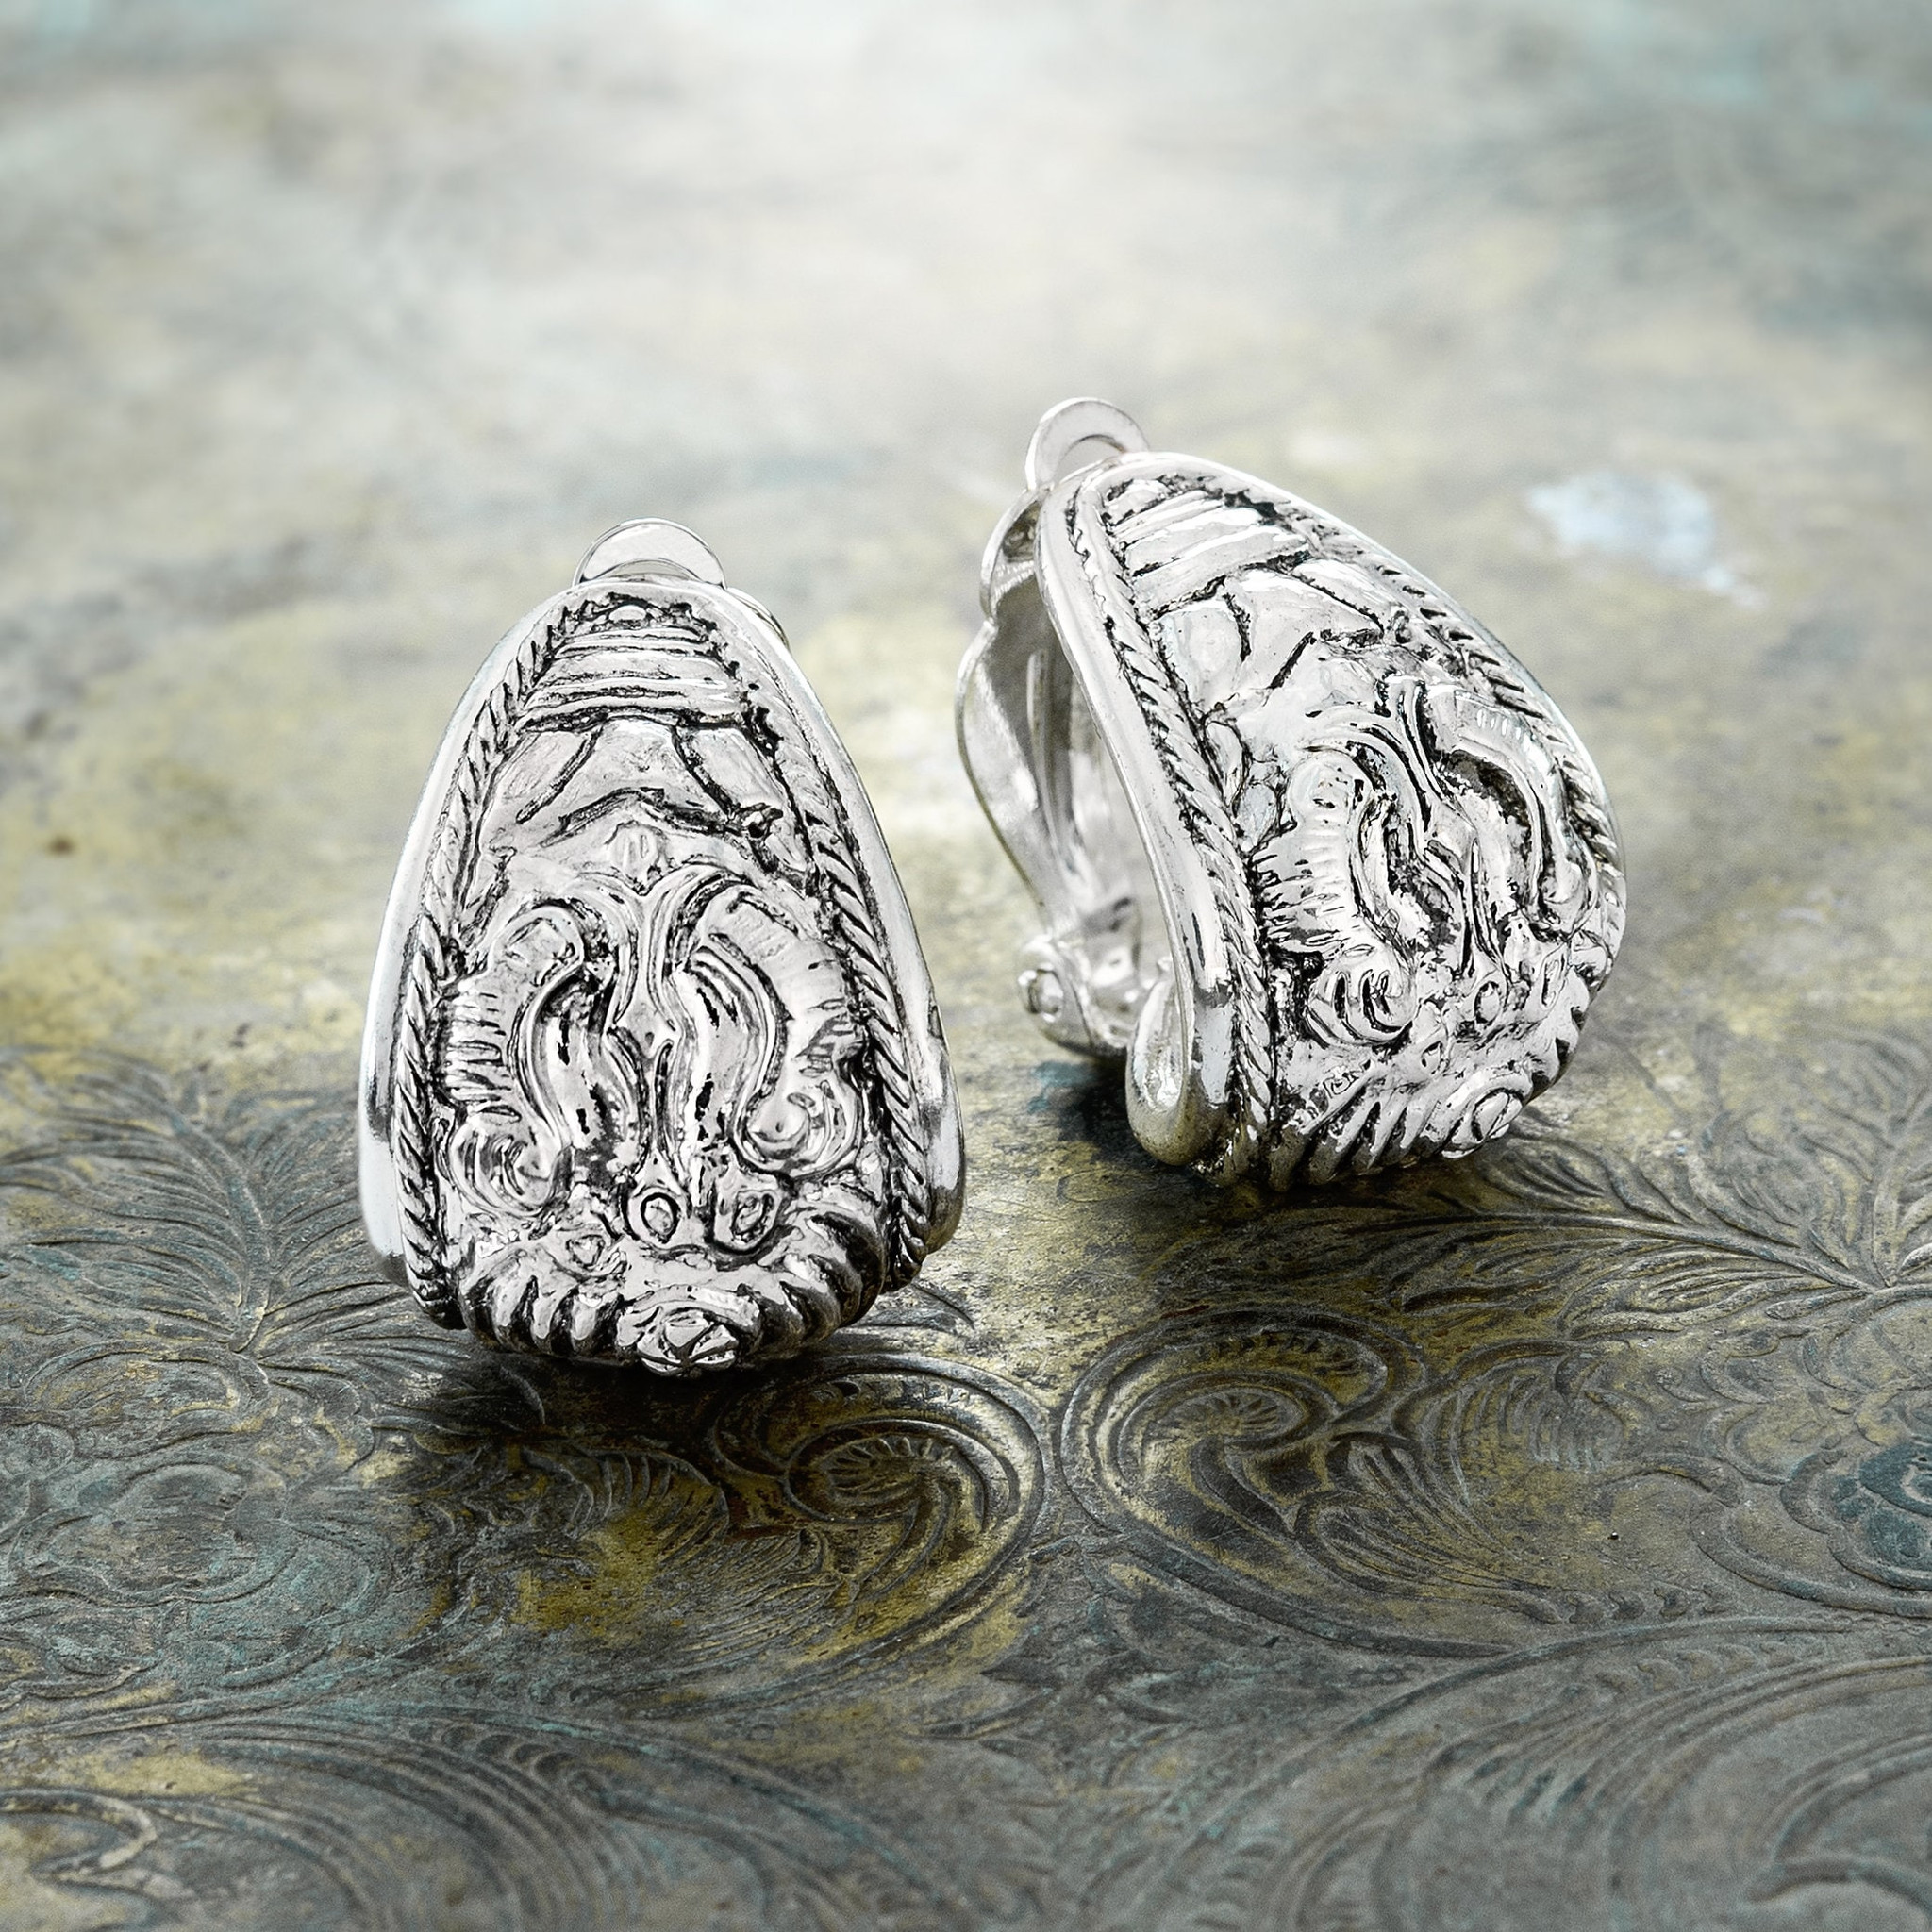 Silver Earrings with Pyramid Shaped Design | Trendy Designer Jhumki Earring  - Earrings, Jewellery - FOLKWAYS